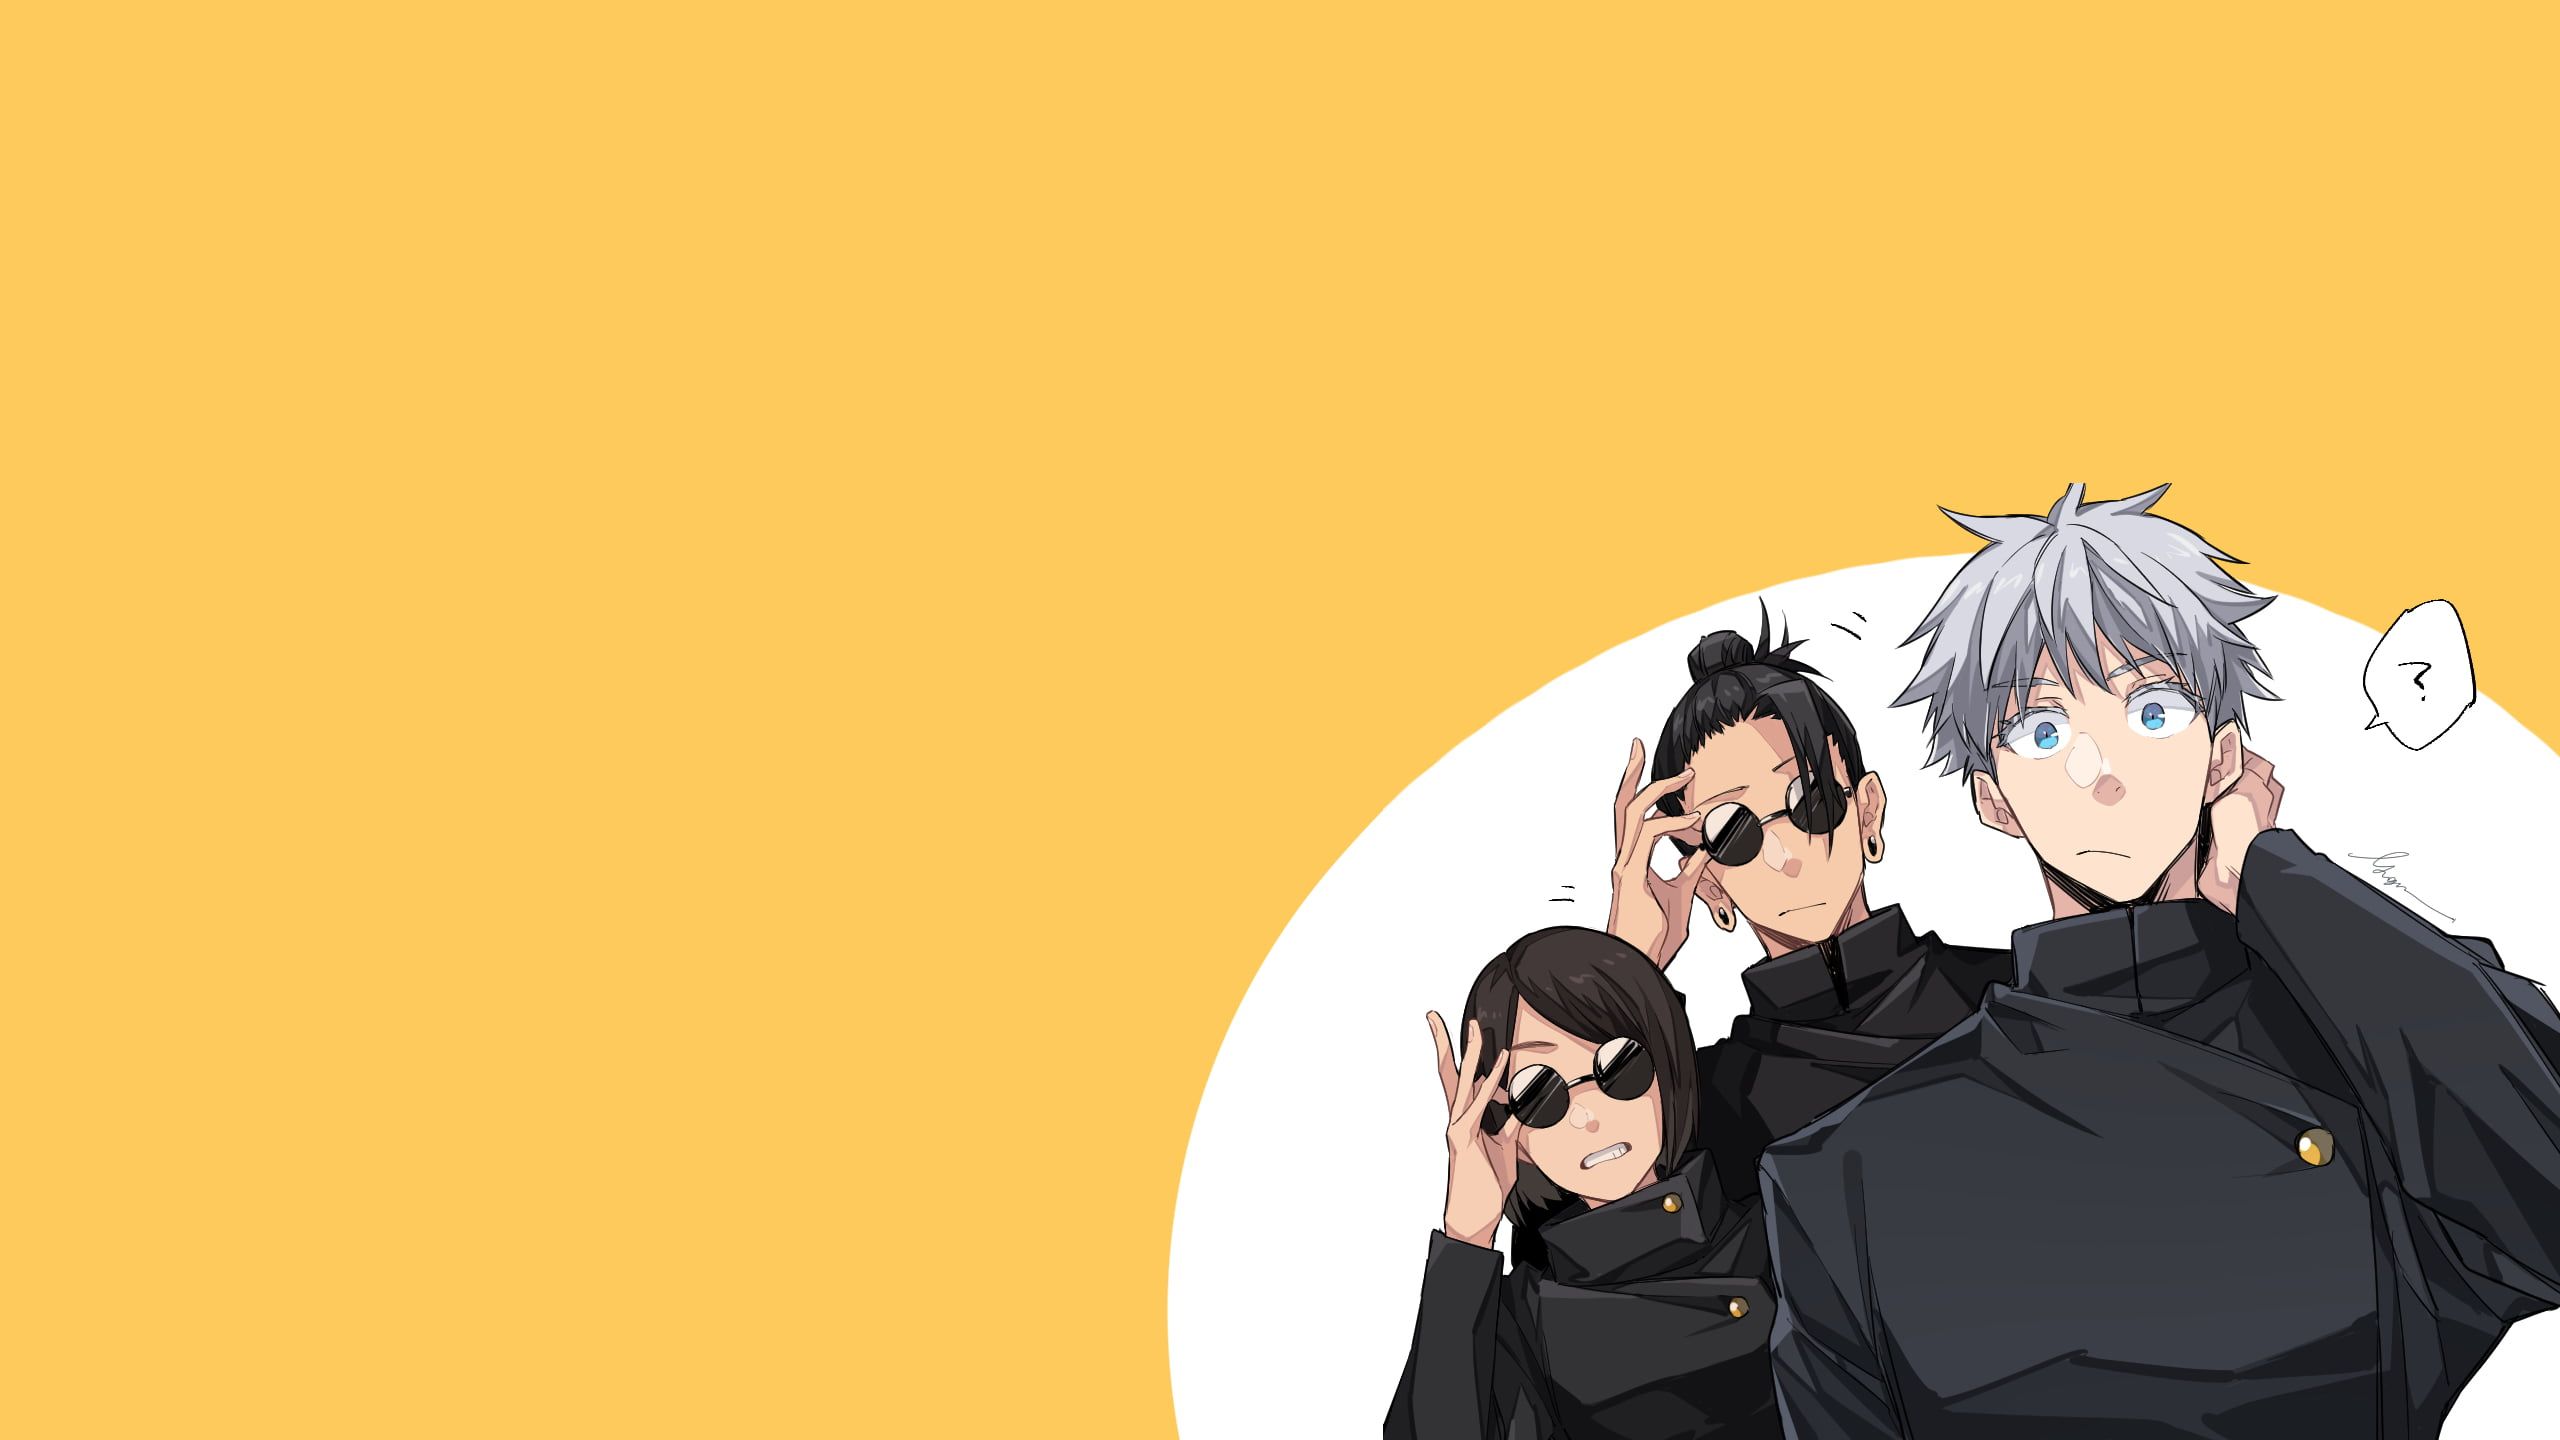 HD wallpaper: Jujutsu Kaisen, anime, sunglasses, white hair, blue eyes, orenji hnkn. Anime, Anime background wallpaper, Jujutsu